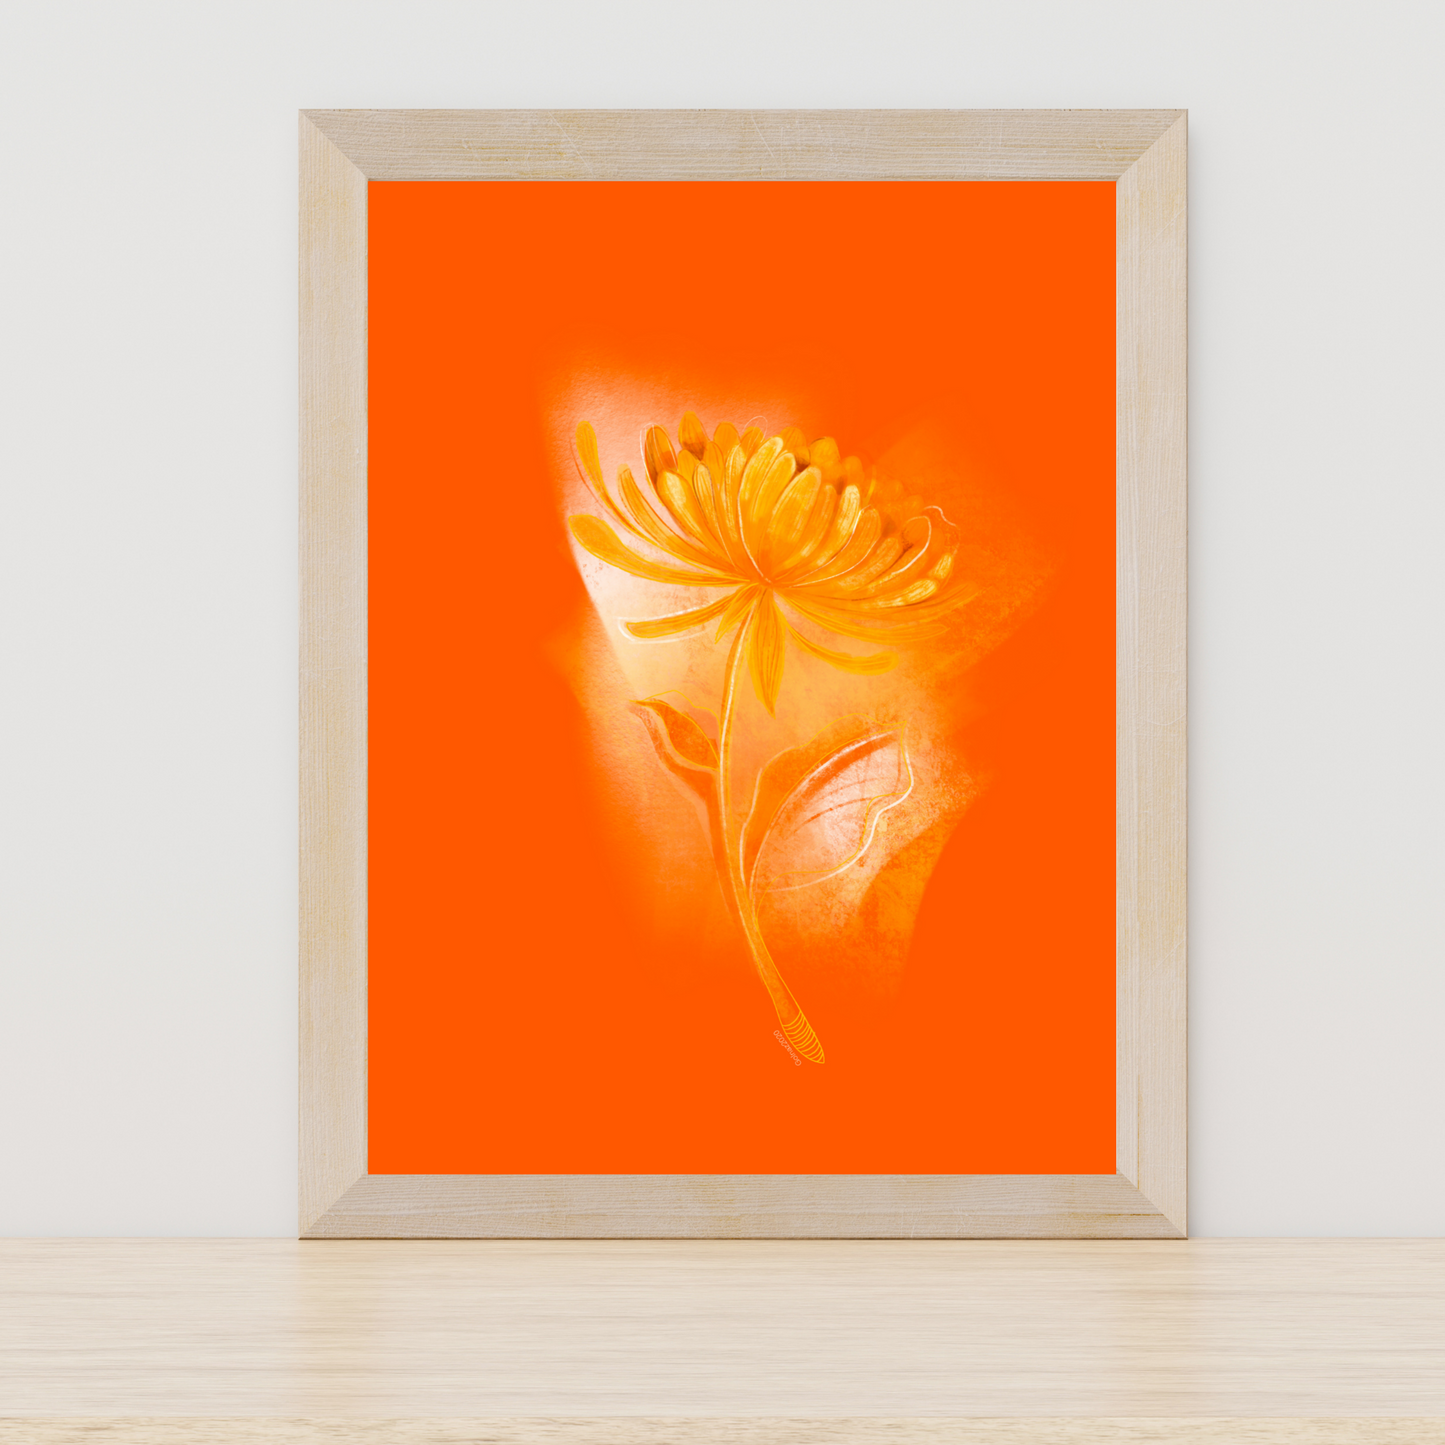 The Chrysanthemum painting by ArisaTeam